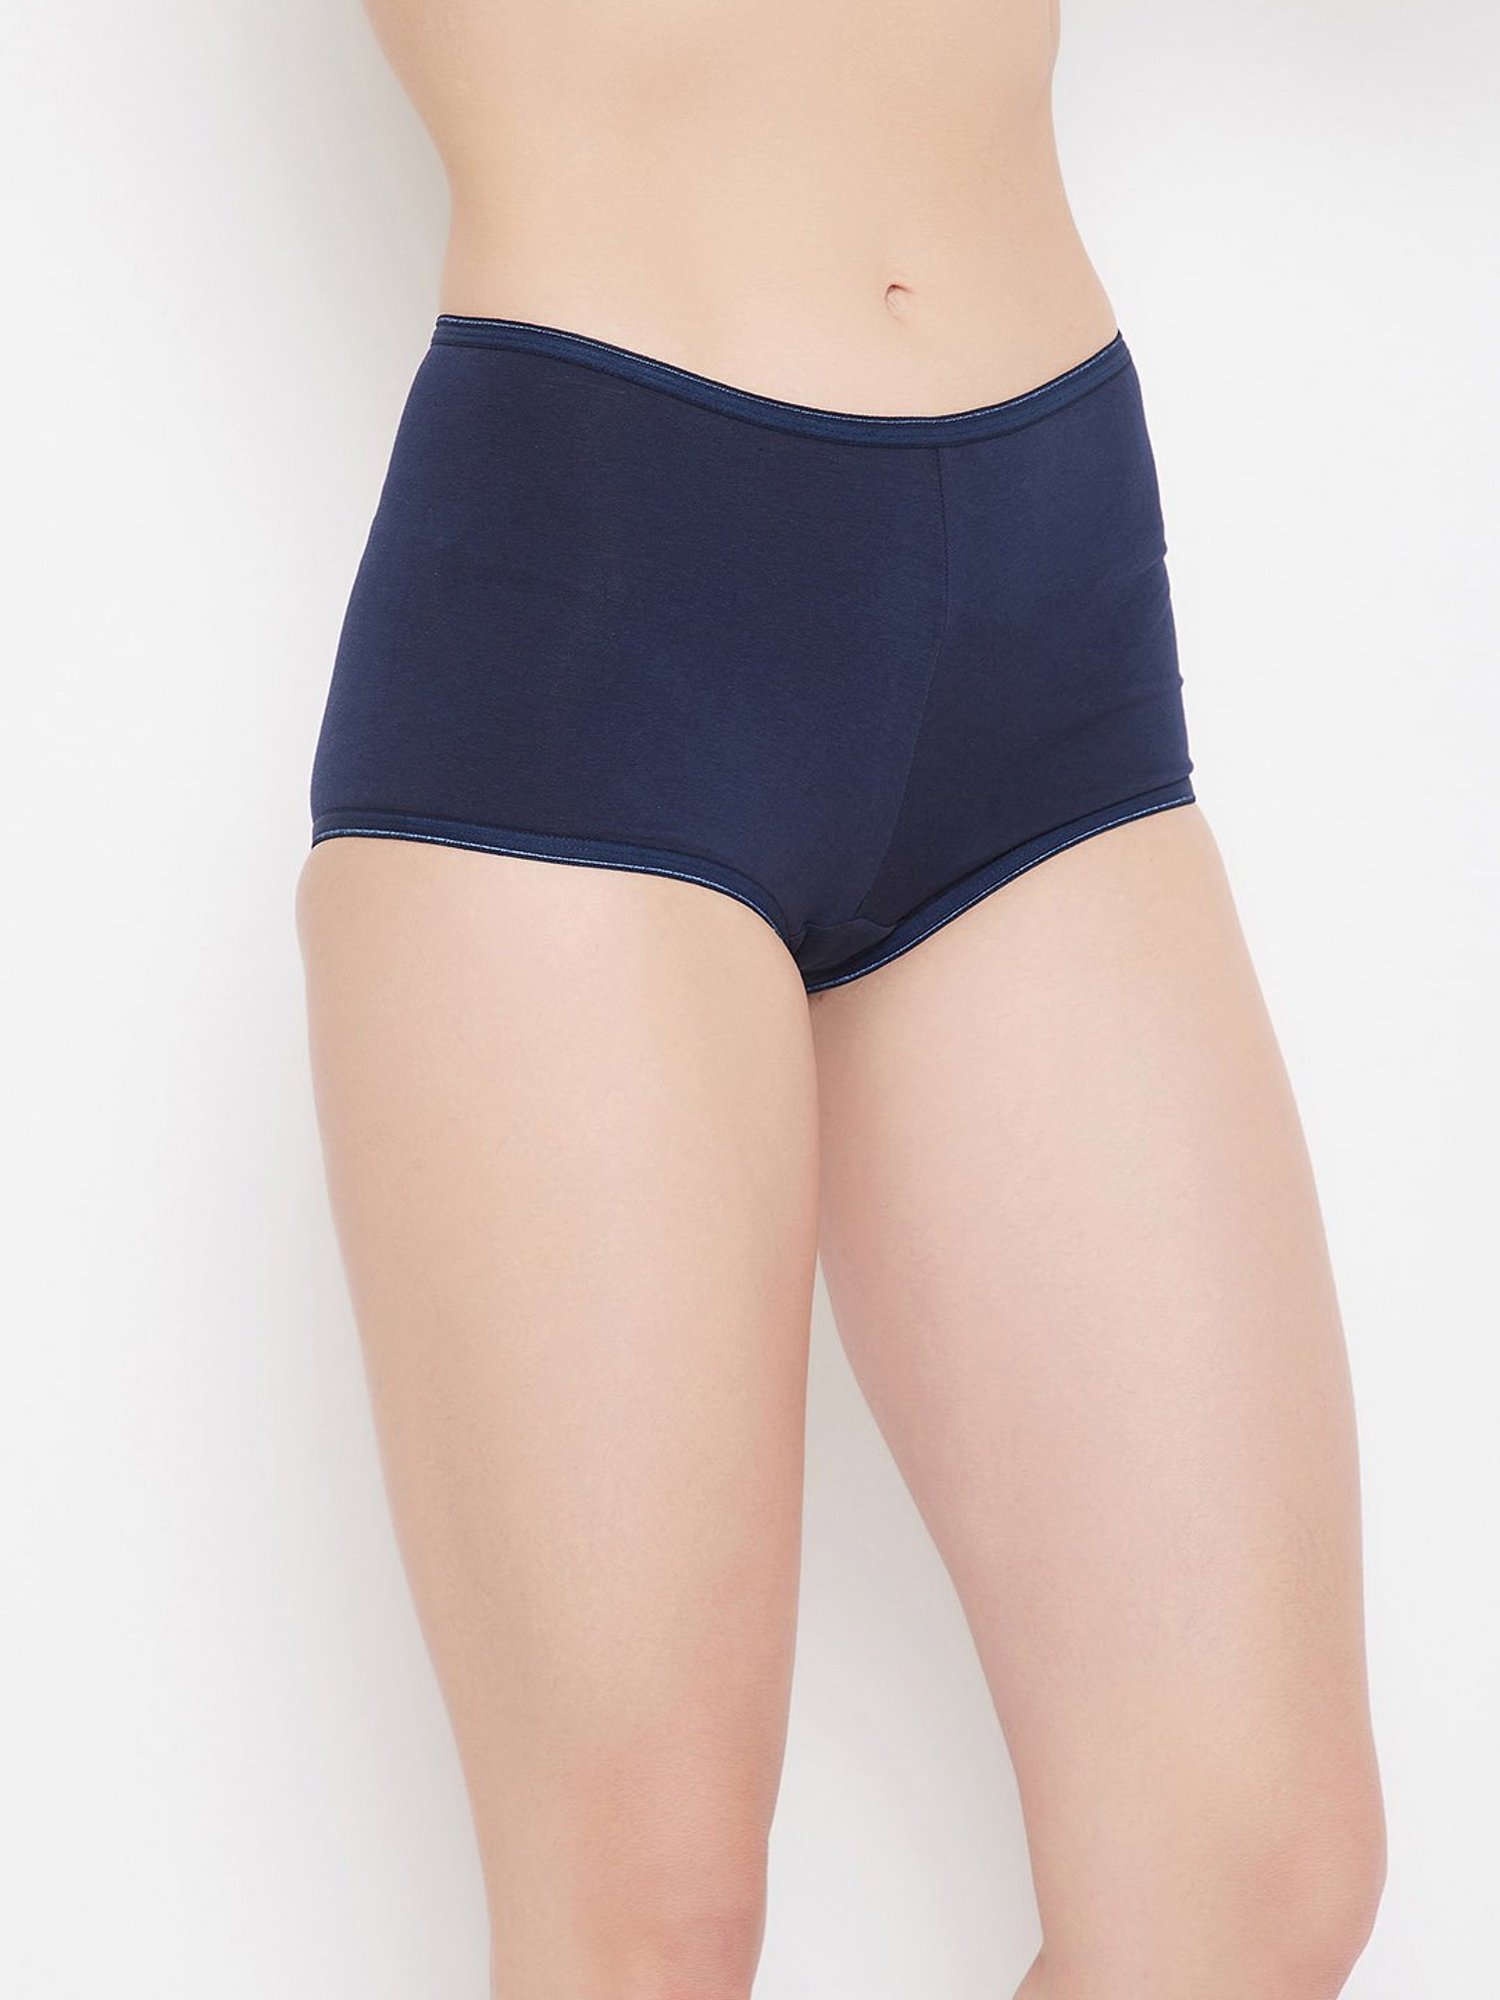 Buy Clovia Blue Cotton Boyshorts Panty for Women Online @ Tata CLiQ